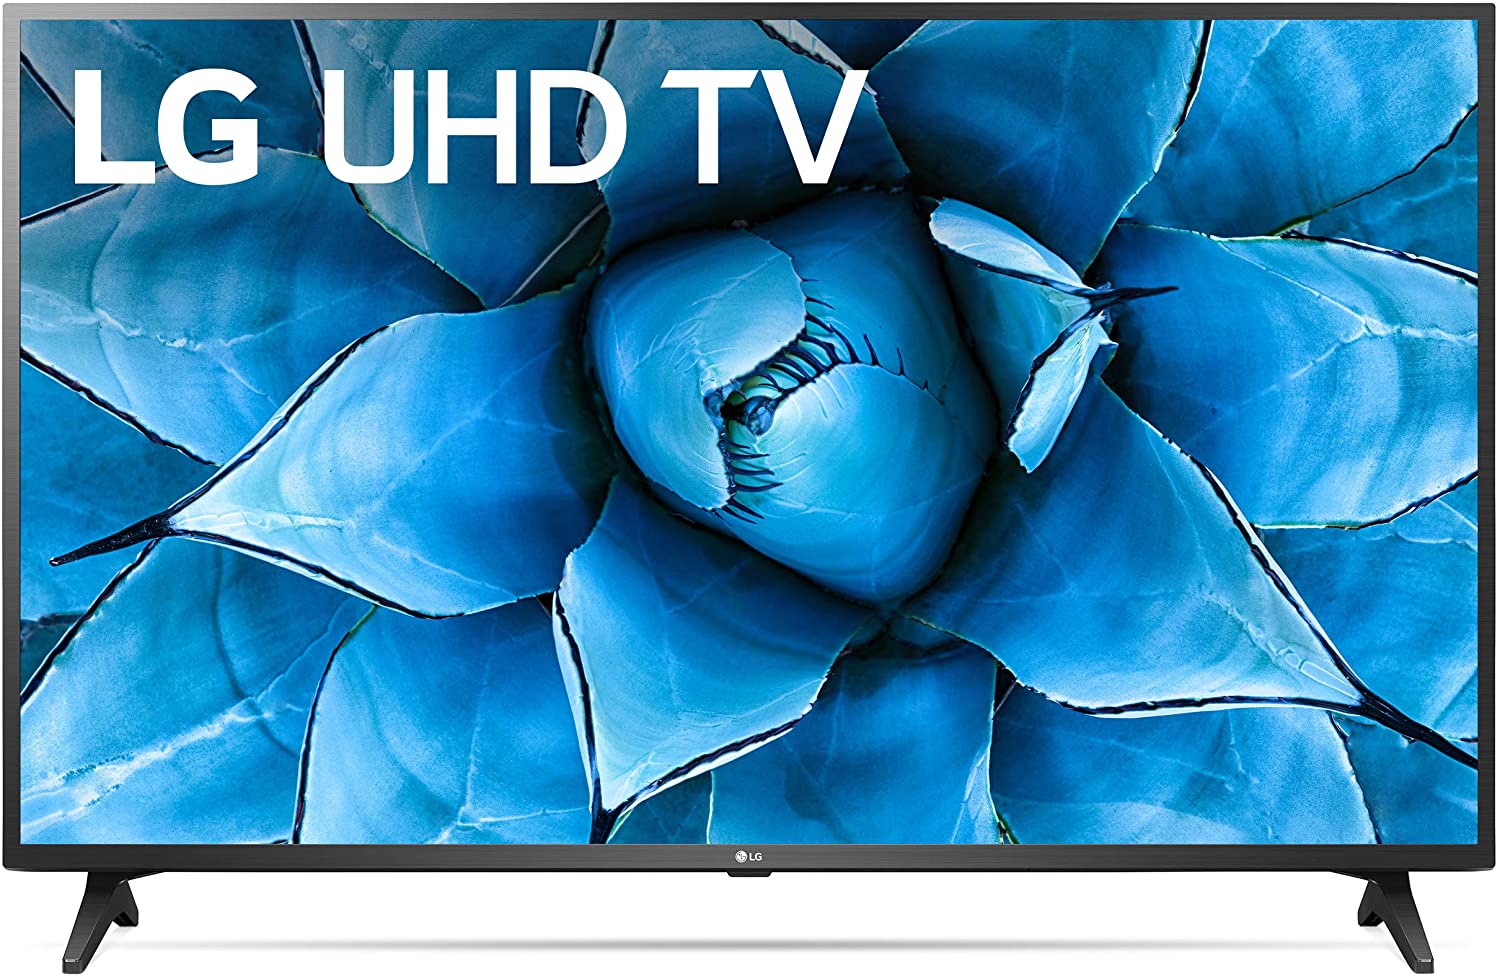 LG 55UN7300PUF ALEXA UHD 73 SERIES 55 4K SMART UHD TV